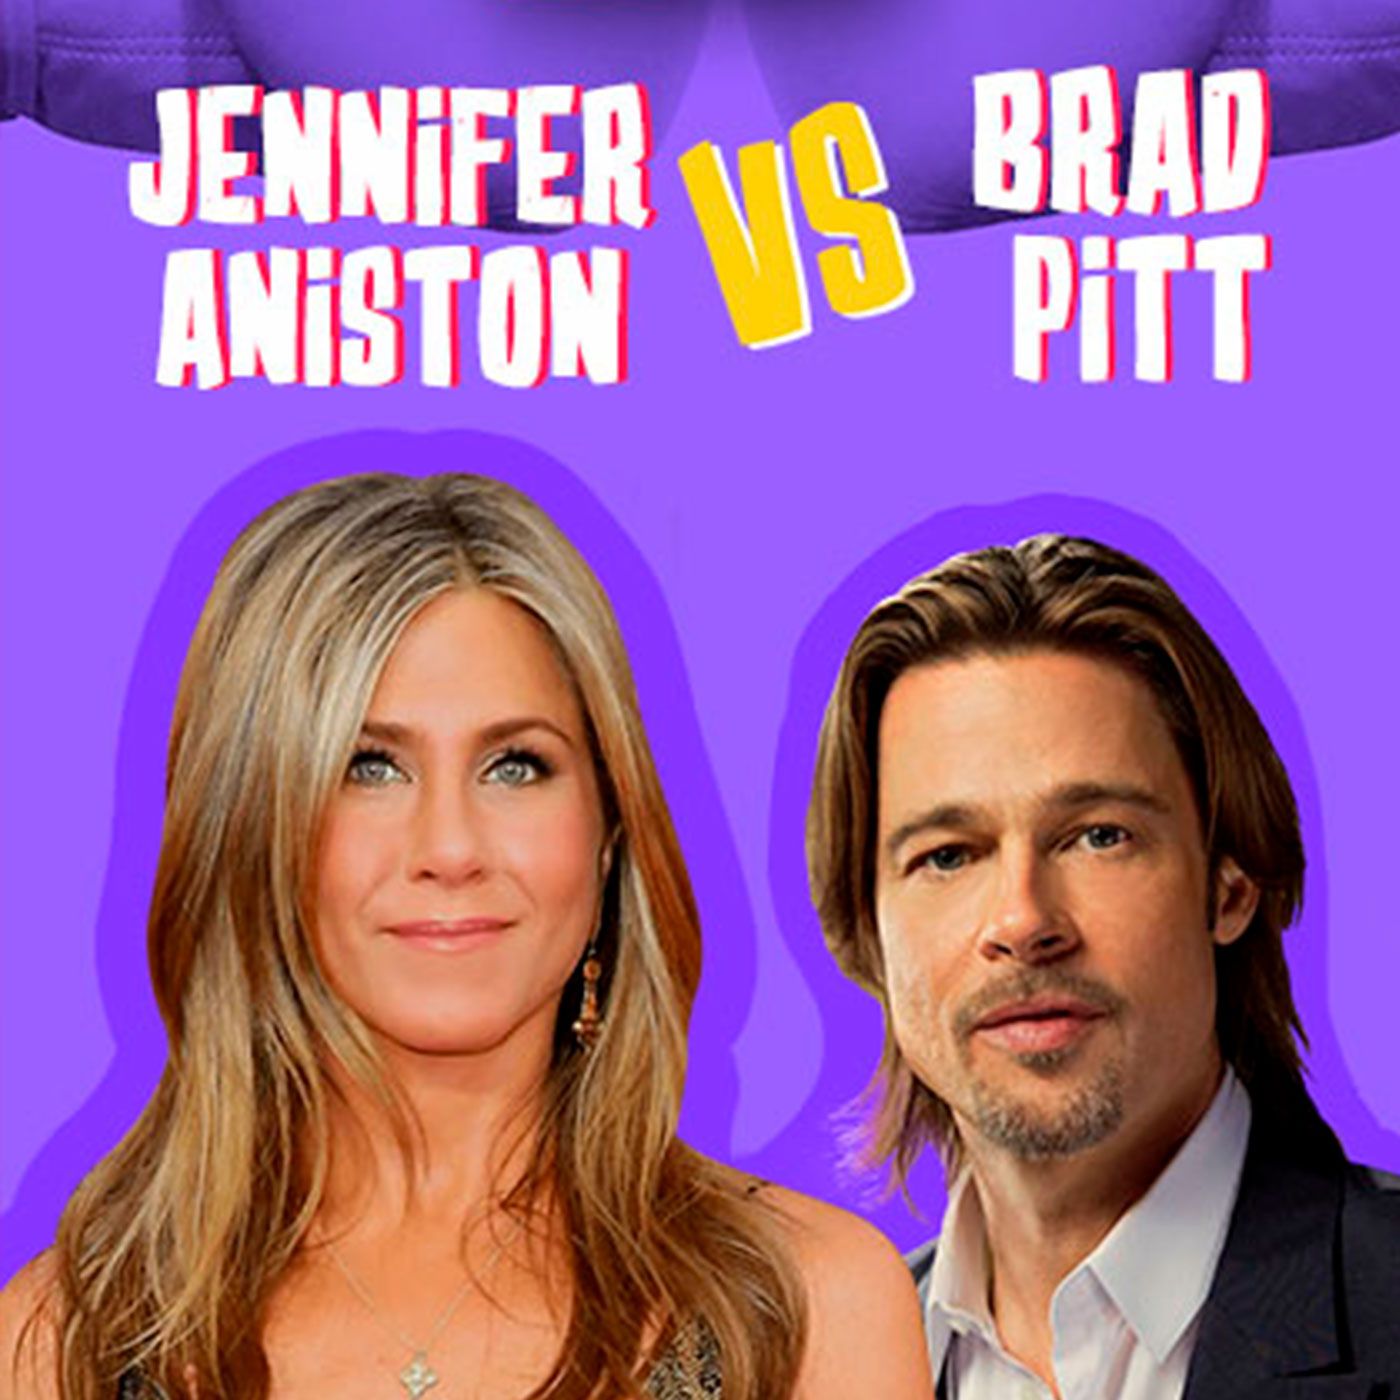 Jennifer Aniston Vs Brad Pitt: ¿Hay reconciliación?